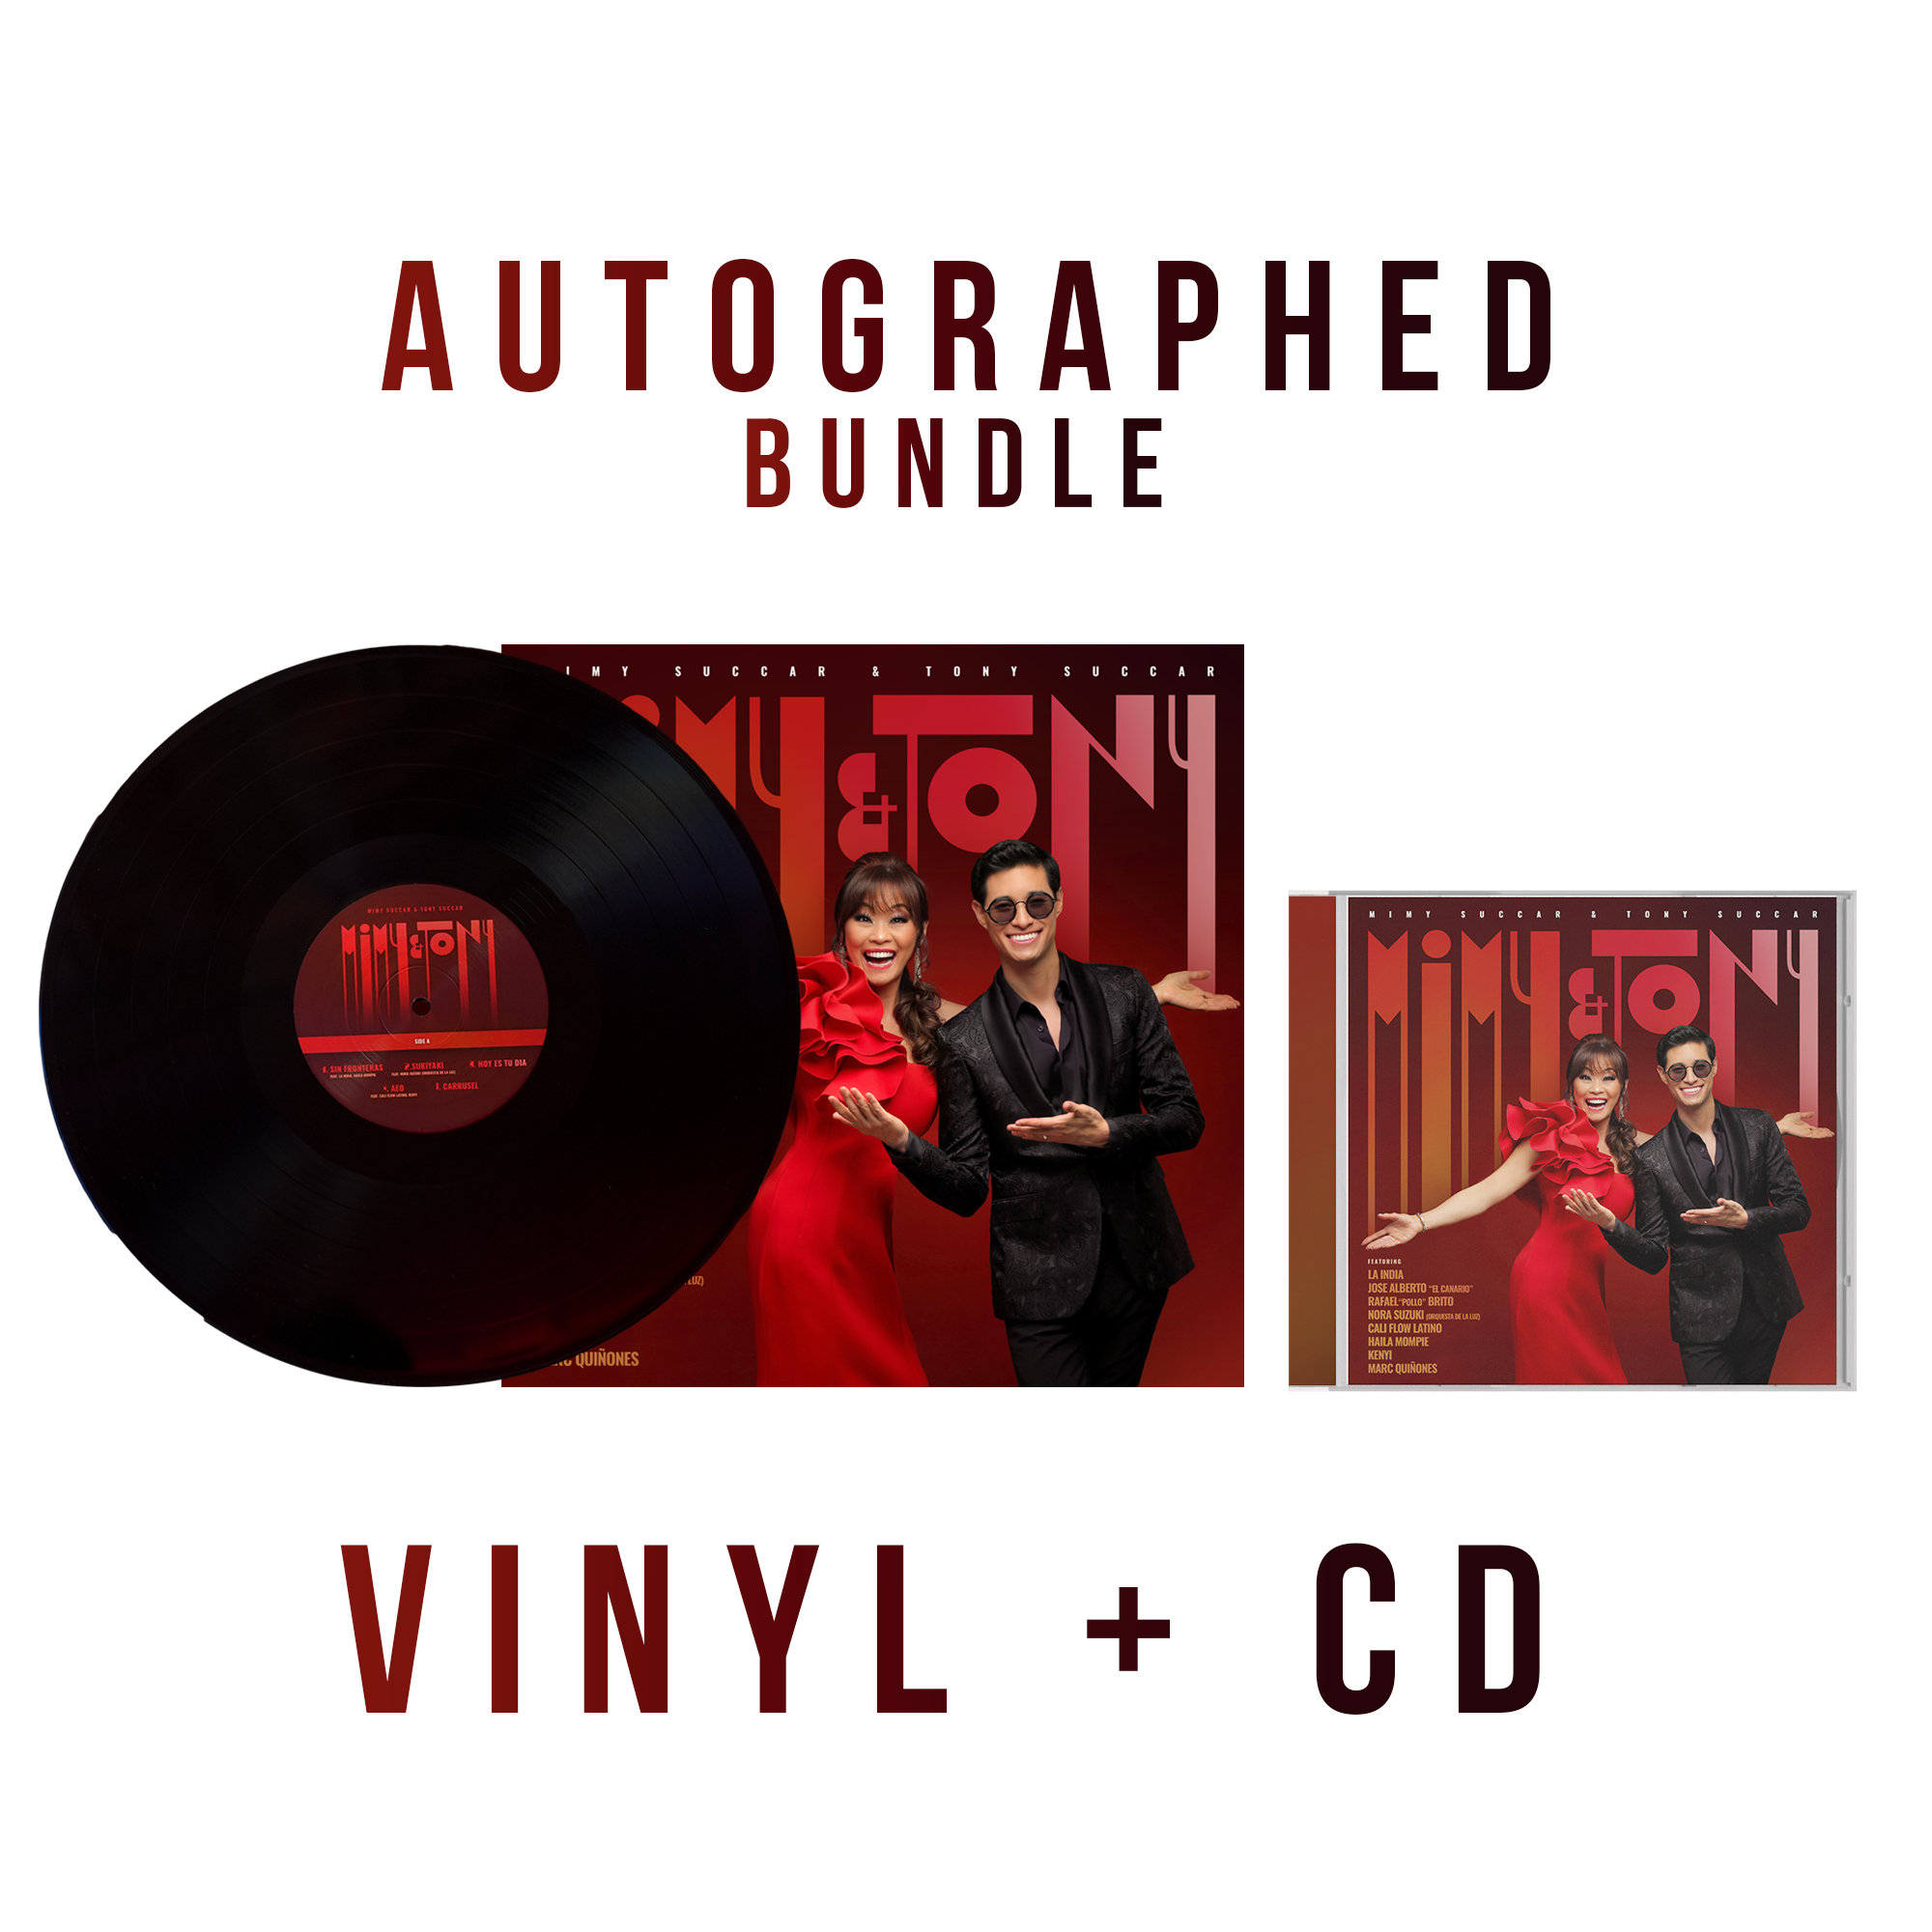  Mimy & Tony (Autographed CD + Vinyl Bundle)